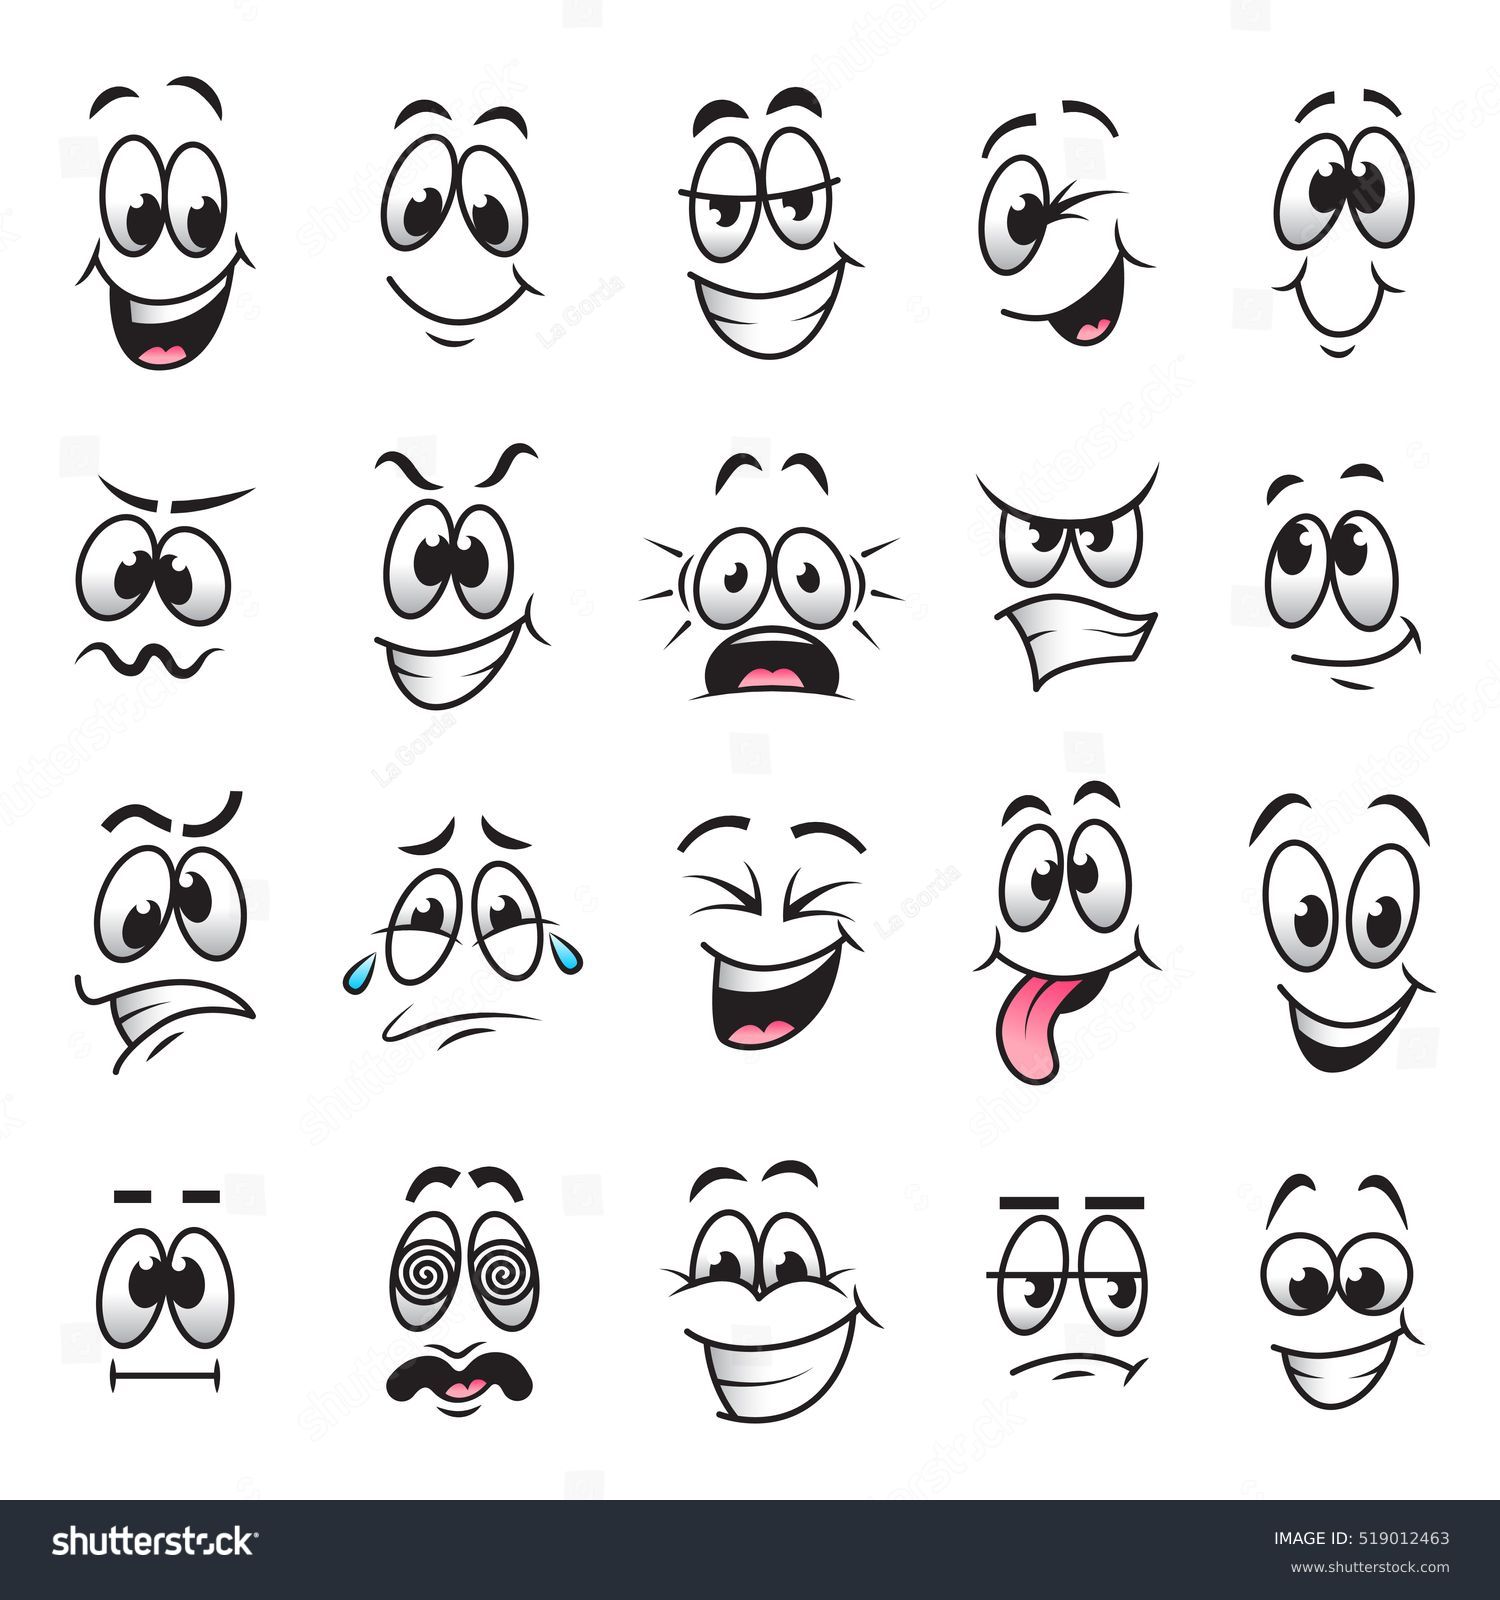 SVG of Cartoon faces expressions vector set svg